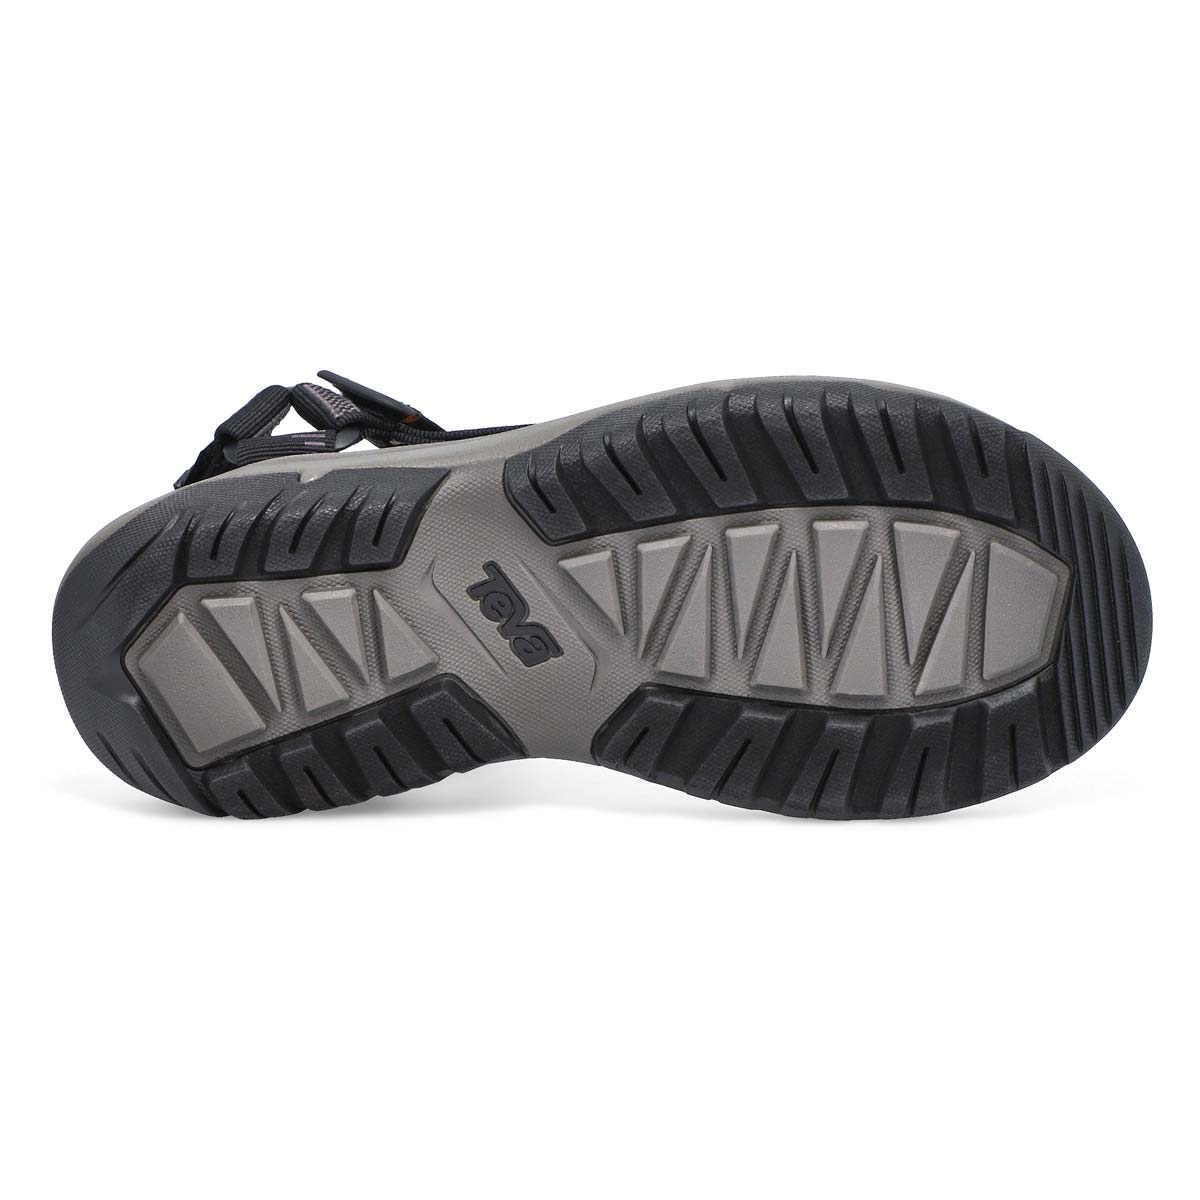 Men's Hurricane XL T2 Sport Sandal - Black/Grey